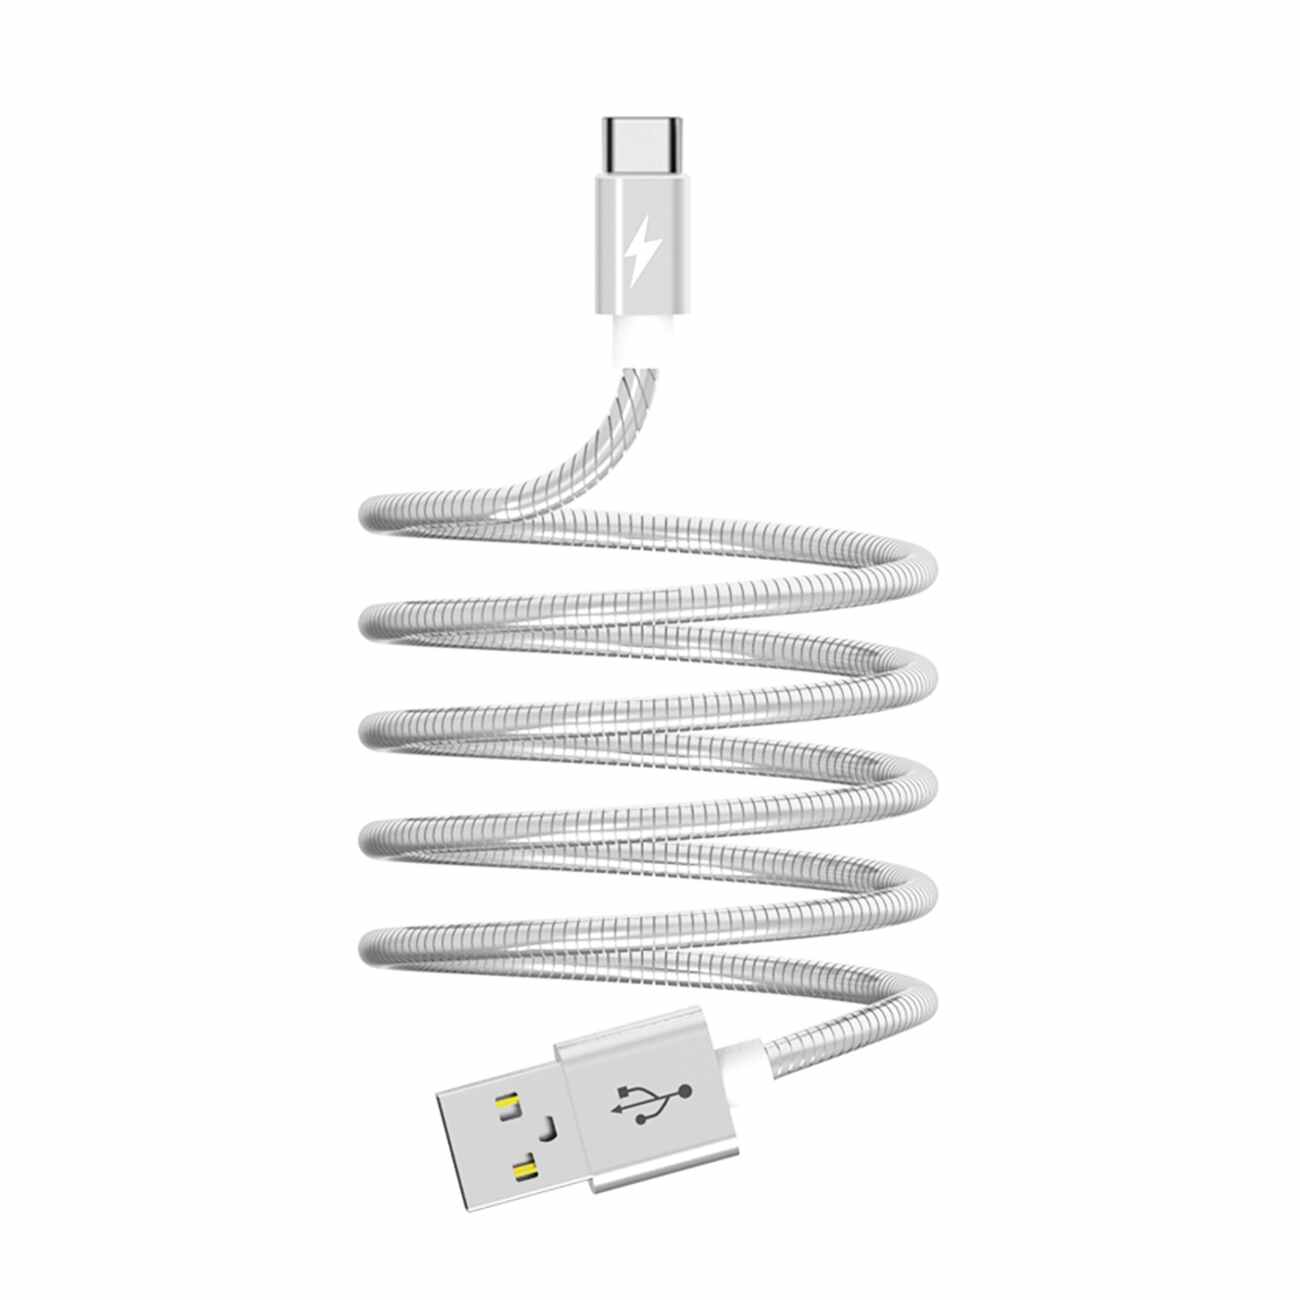 Data Cable Premium Full Hi-Speed Moisture 2.6A Silver Color